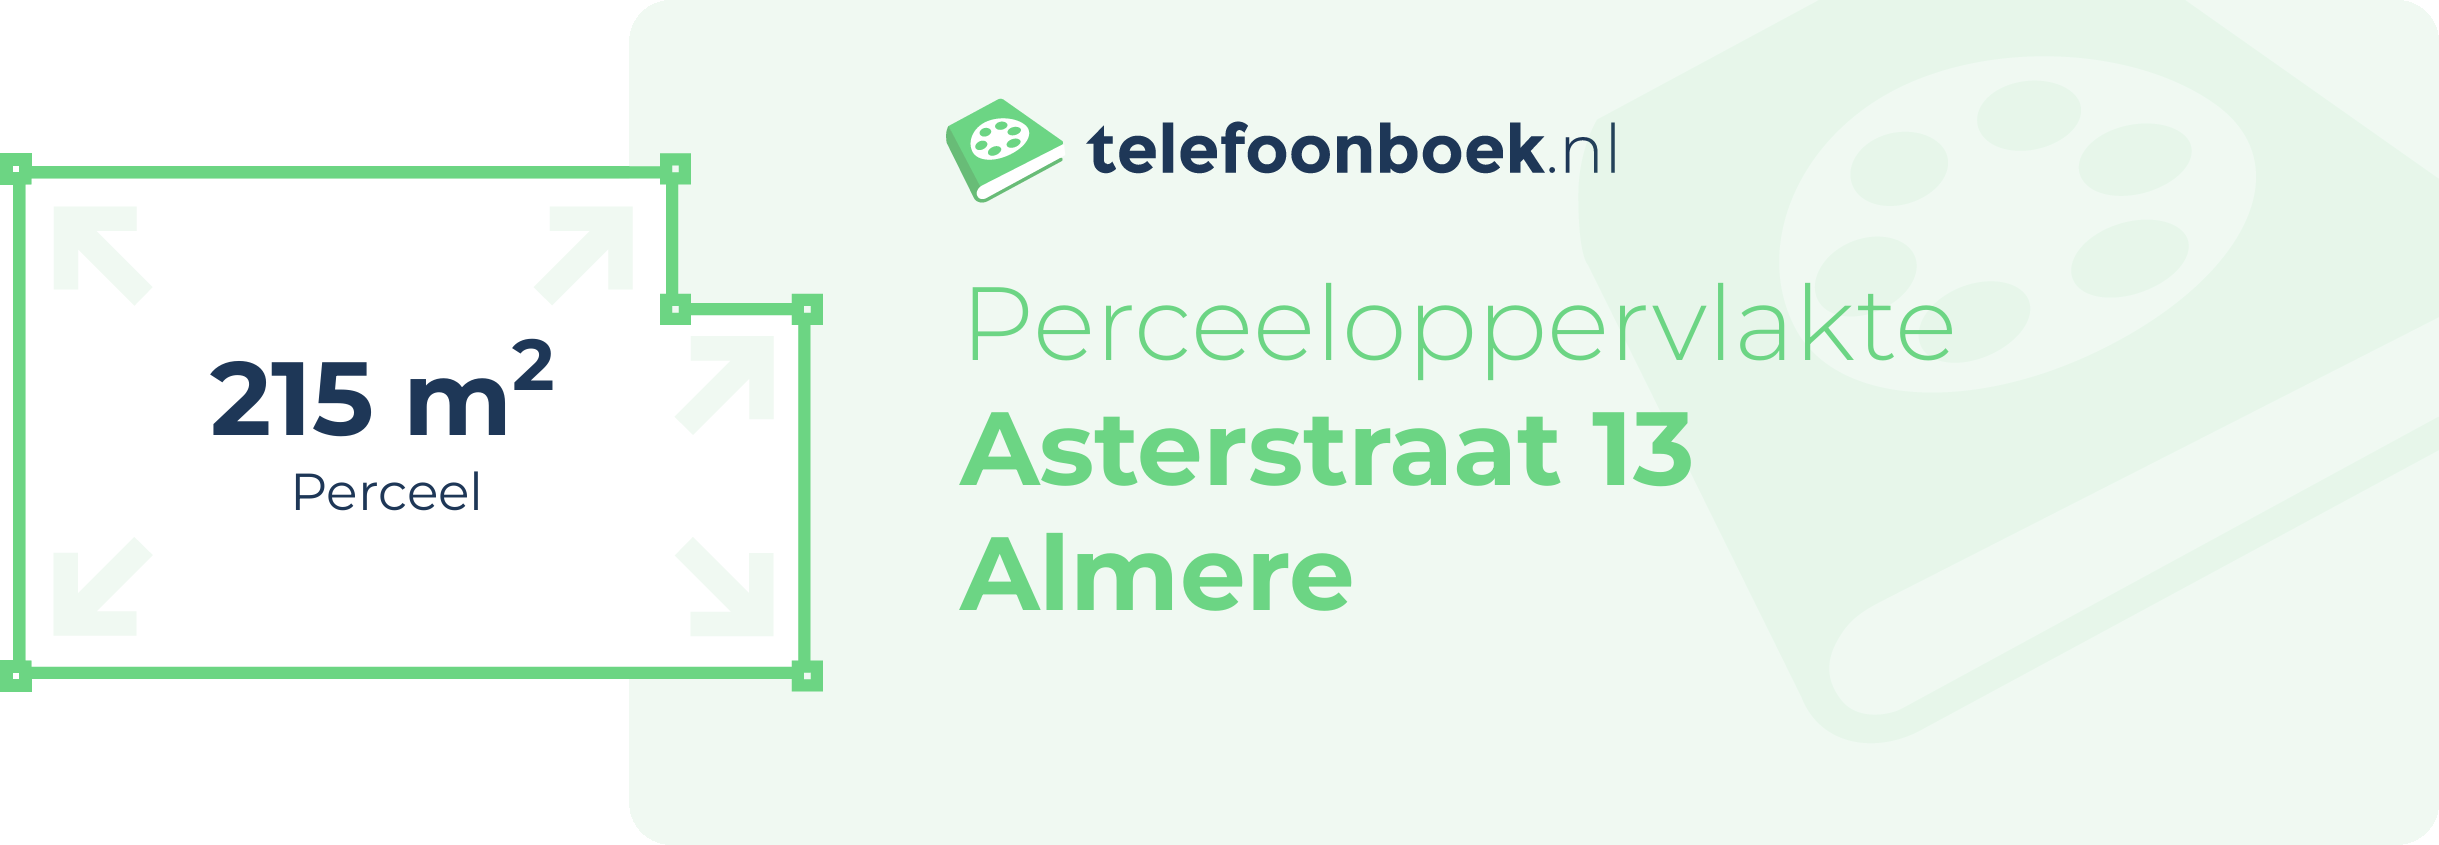 Perceeloppervlakte Asterstraat 13 Almere